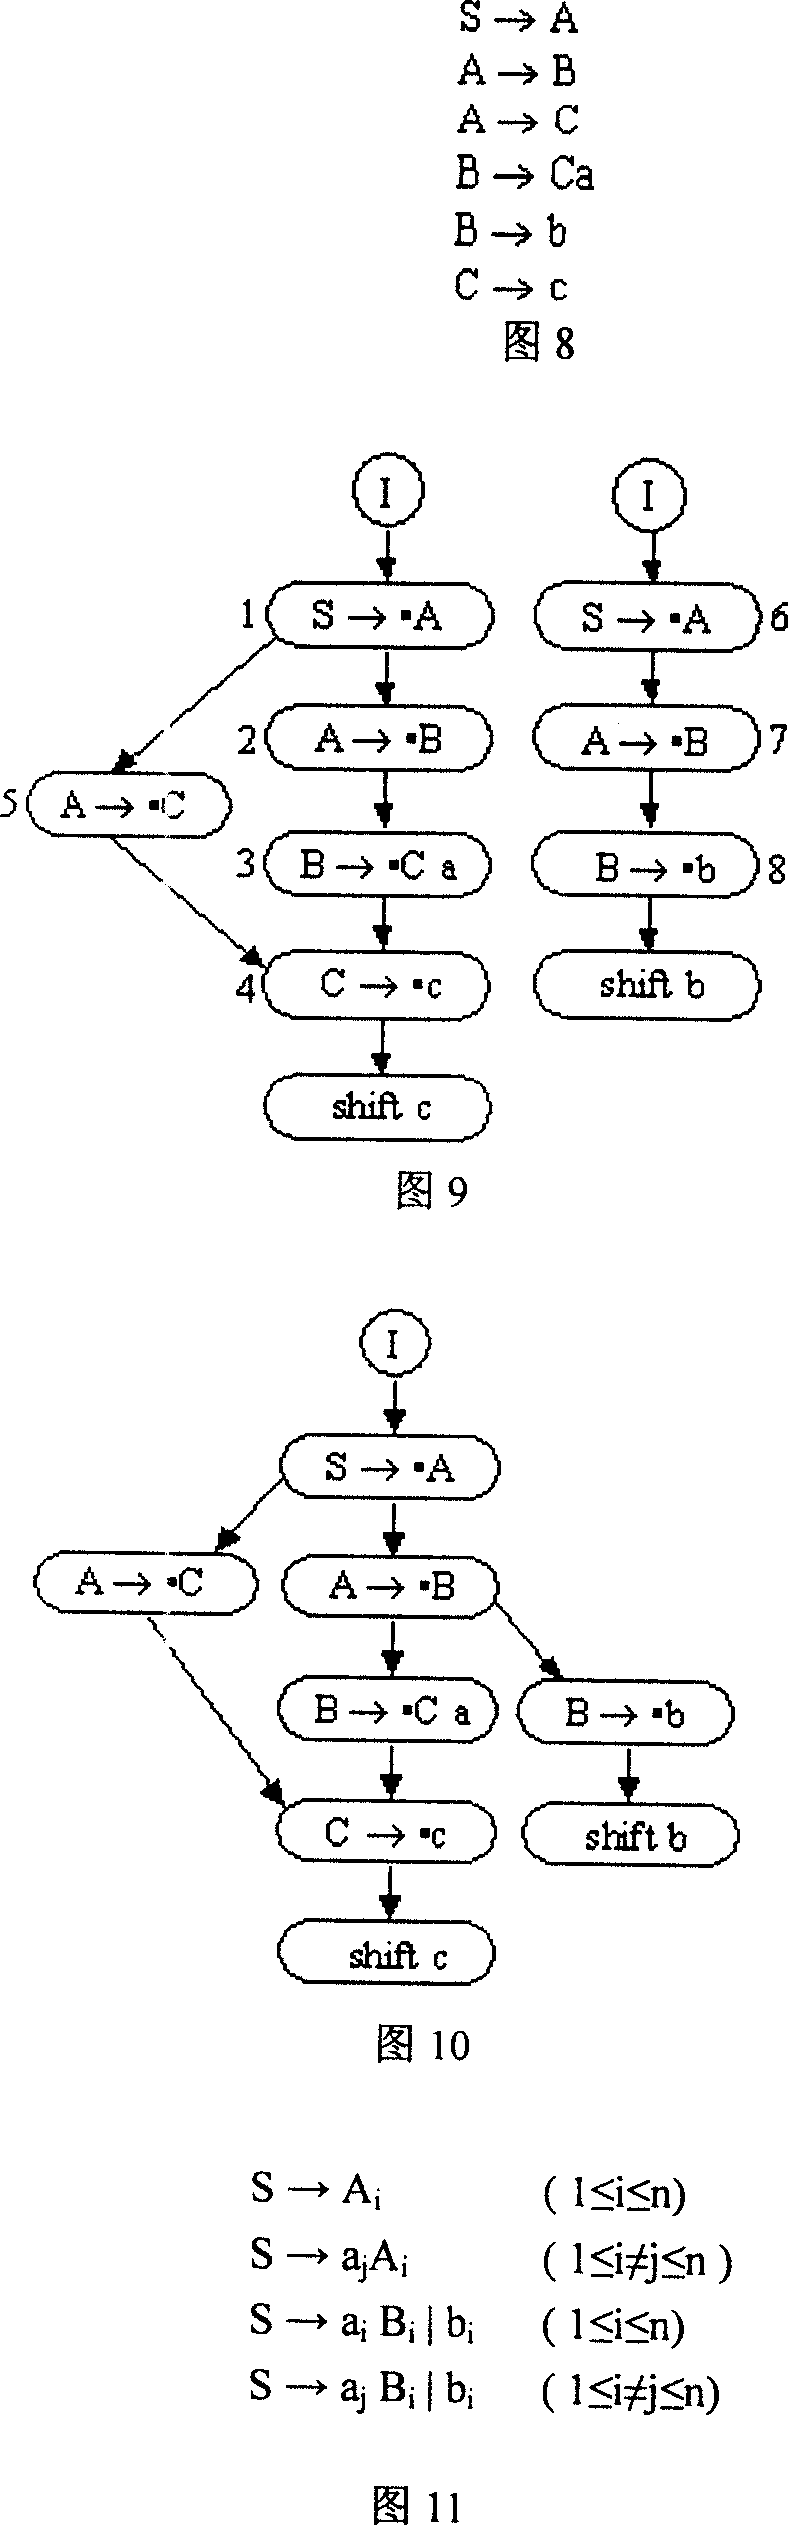 Breakpoint debugging method for LR(k) grammar random grammar position